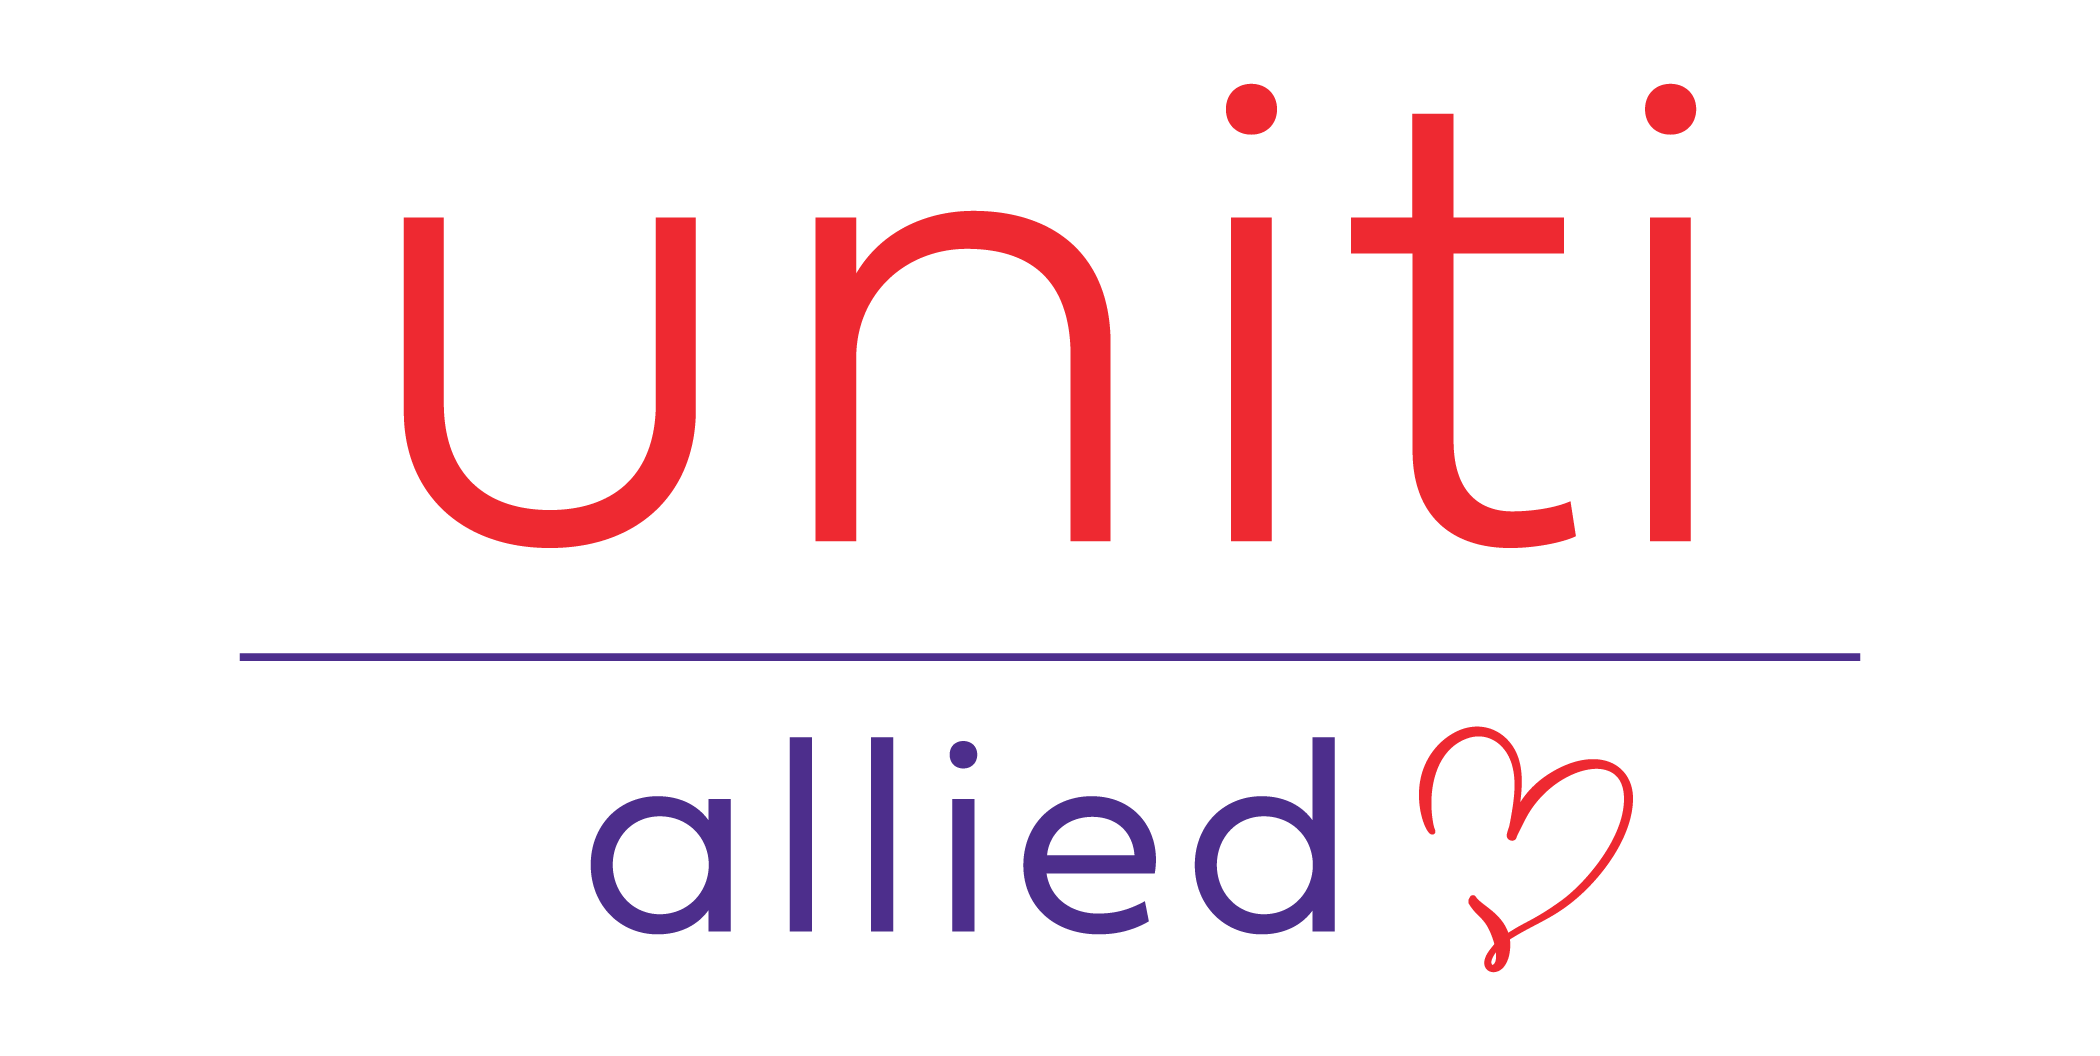 Unit Nursing Logo